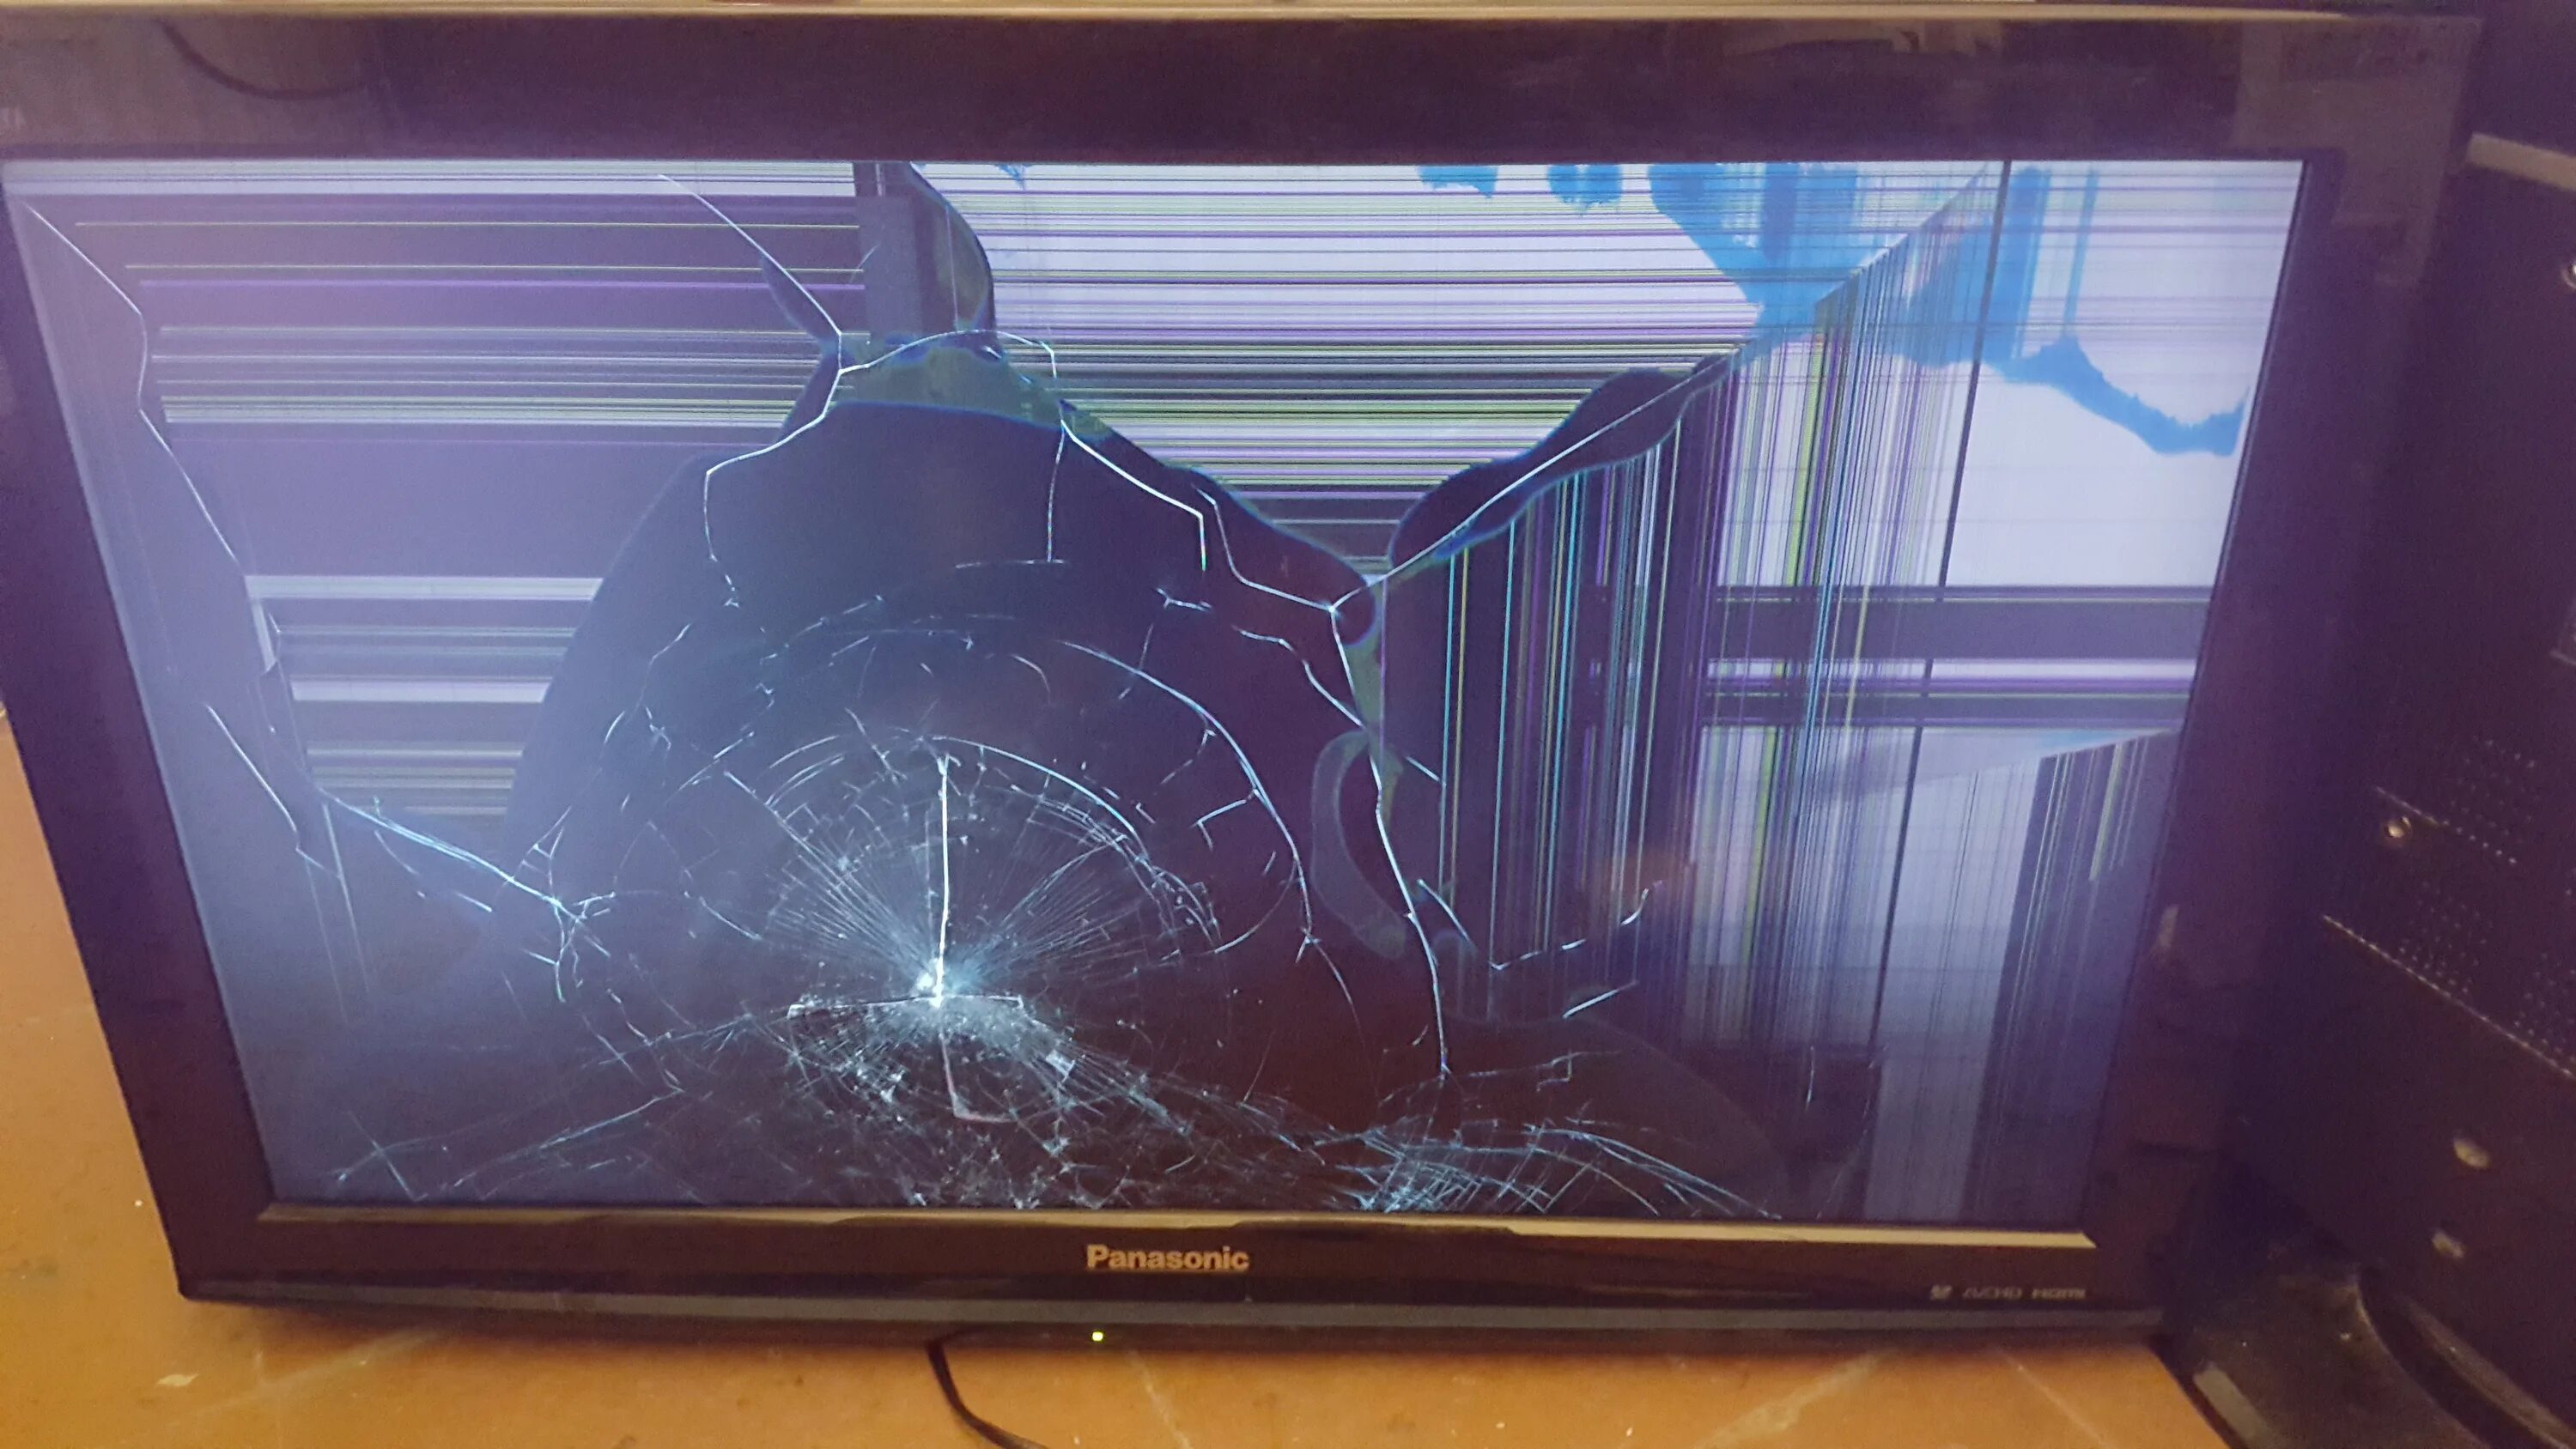 Разбитый телевизор Панасоник. Сломанный телевизор. Разбитый монитор. Телевизор с разбитой матрицей.